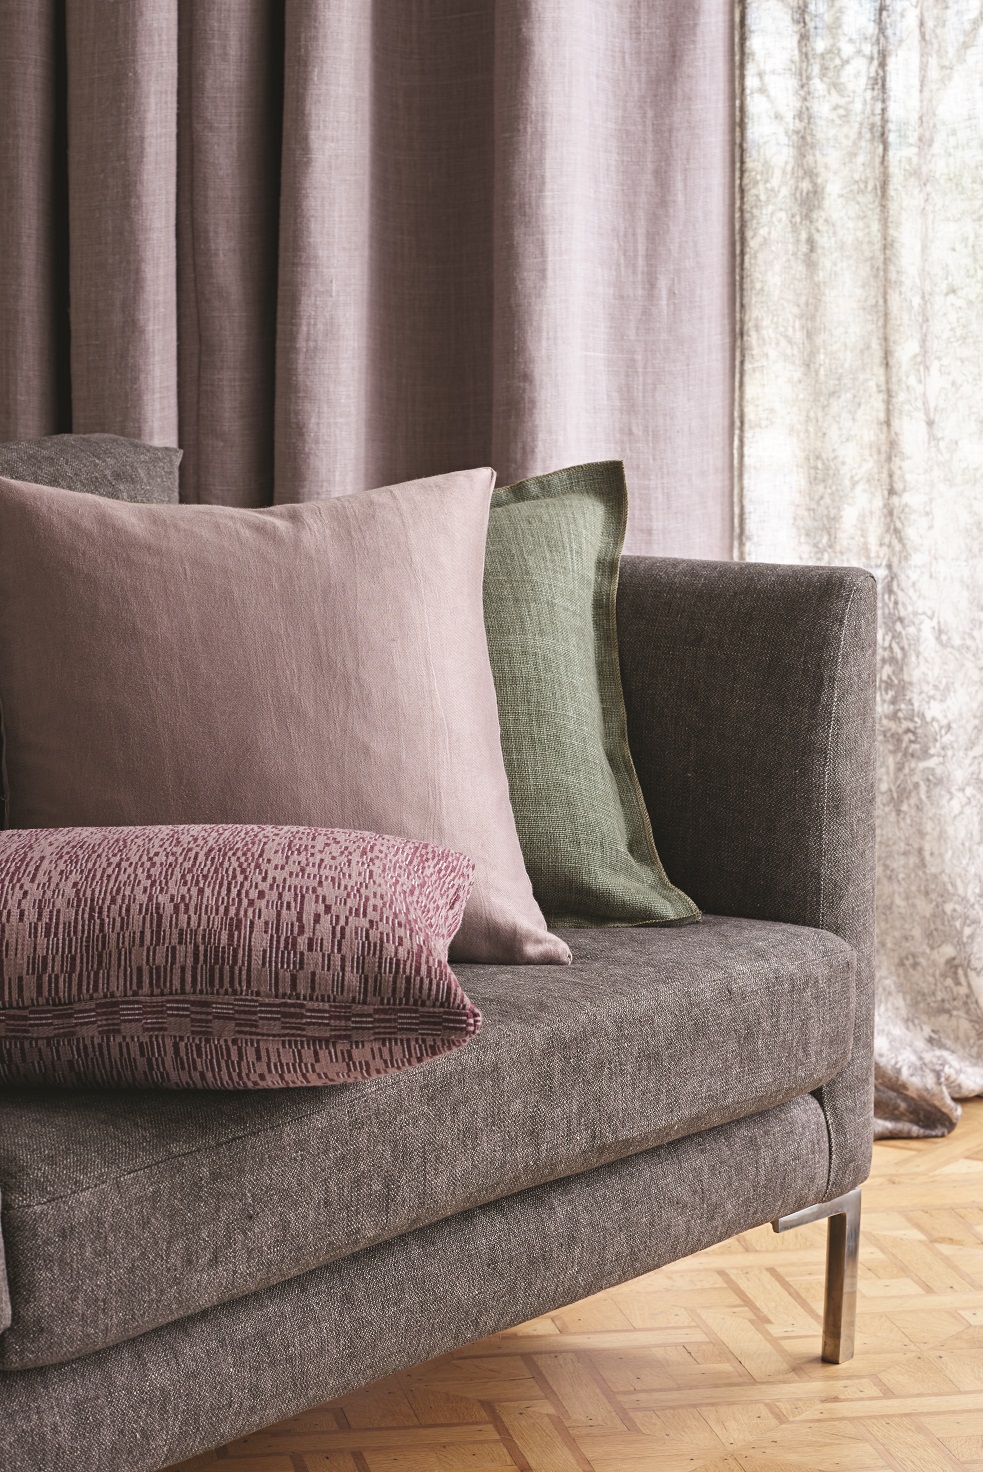 Mohair, Cotton and Silk Velvet Textured Upholstery Patterned